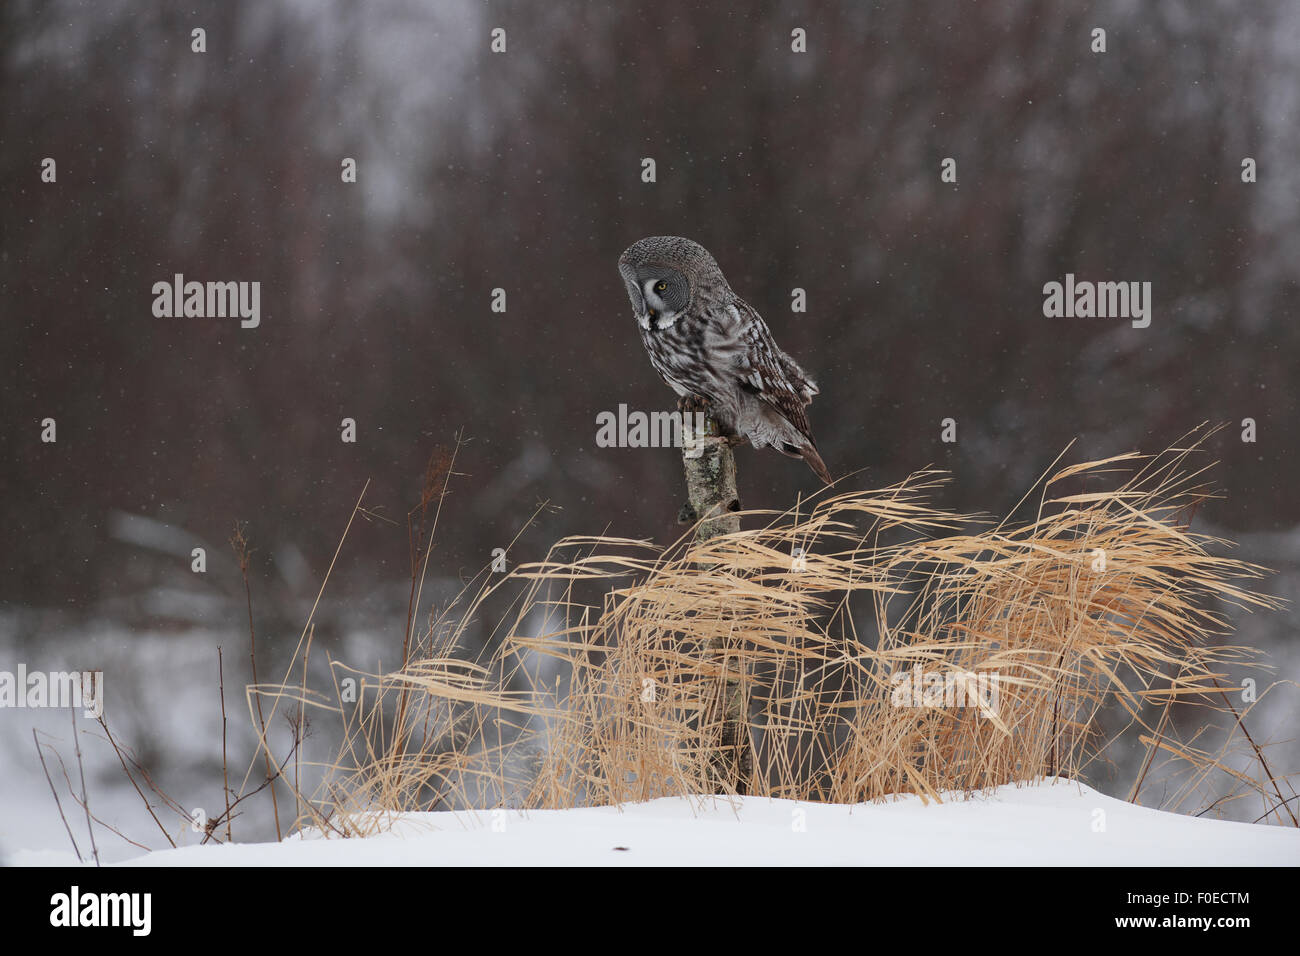 Female Great grey owl (Strix nebulosa) on tree stump, Oulu, Finland, February 2009 Stock Photo